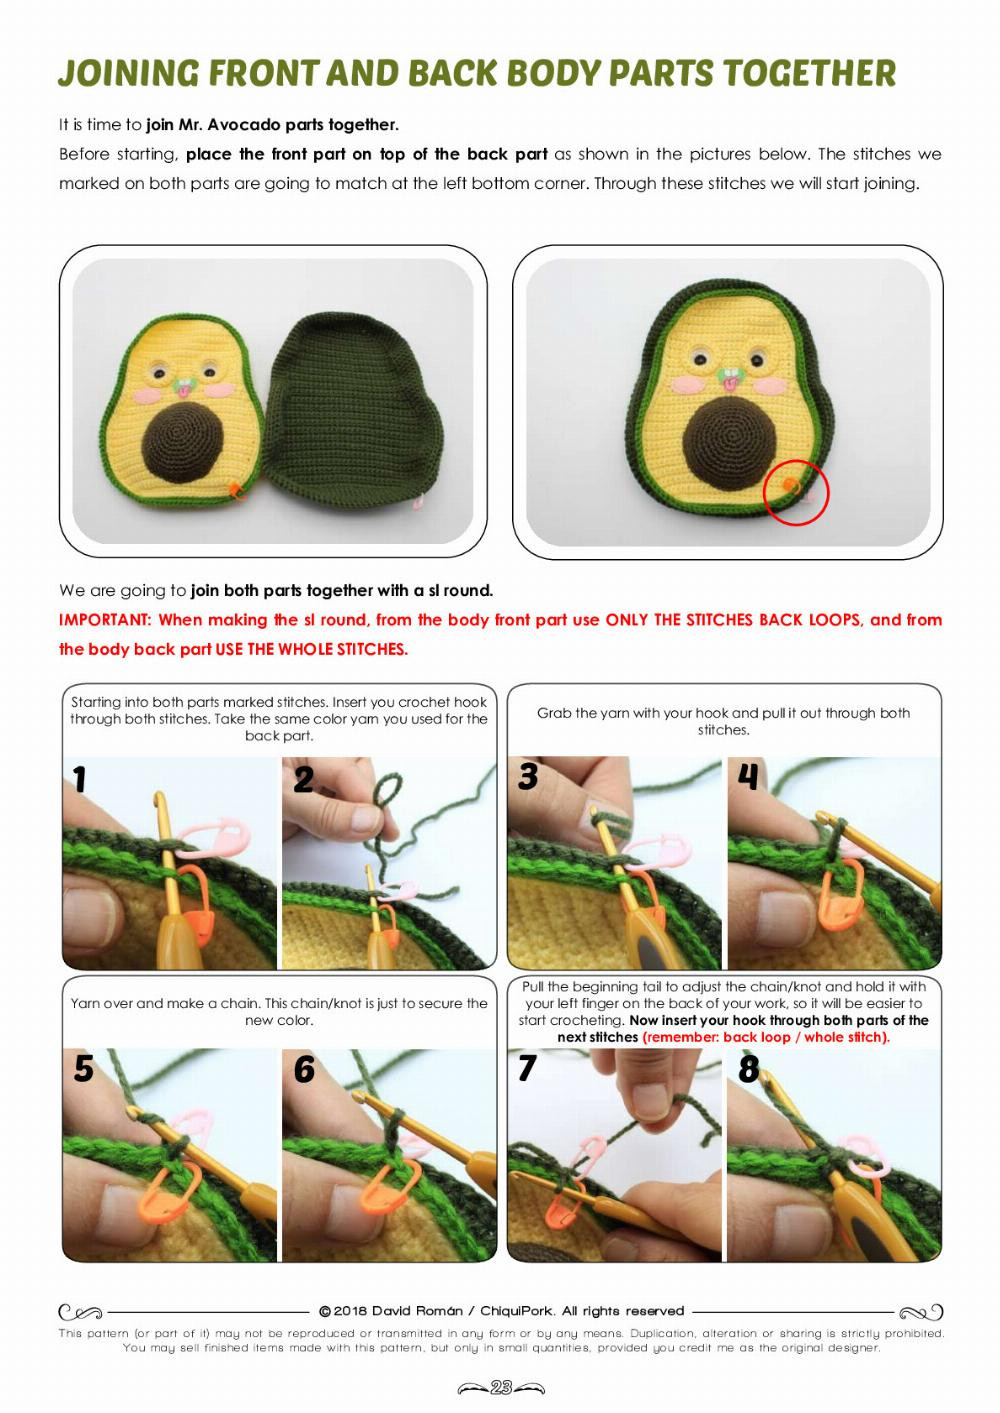 mr. avocado crochet pattern